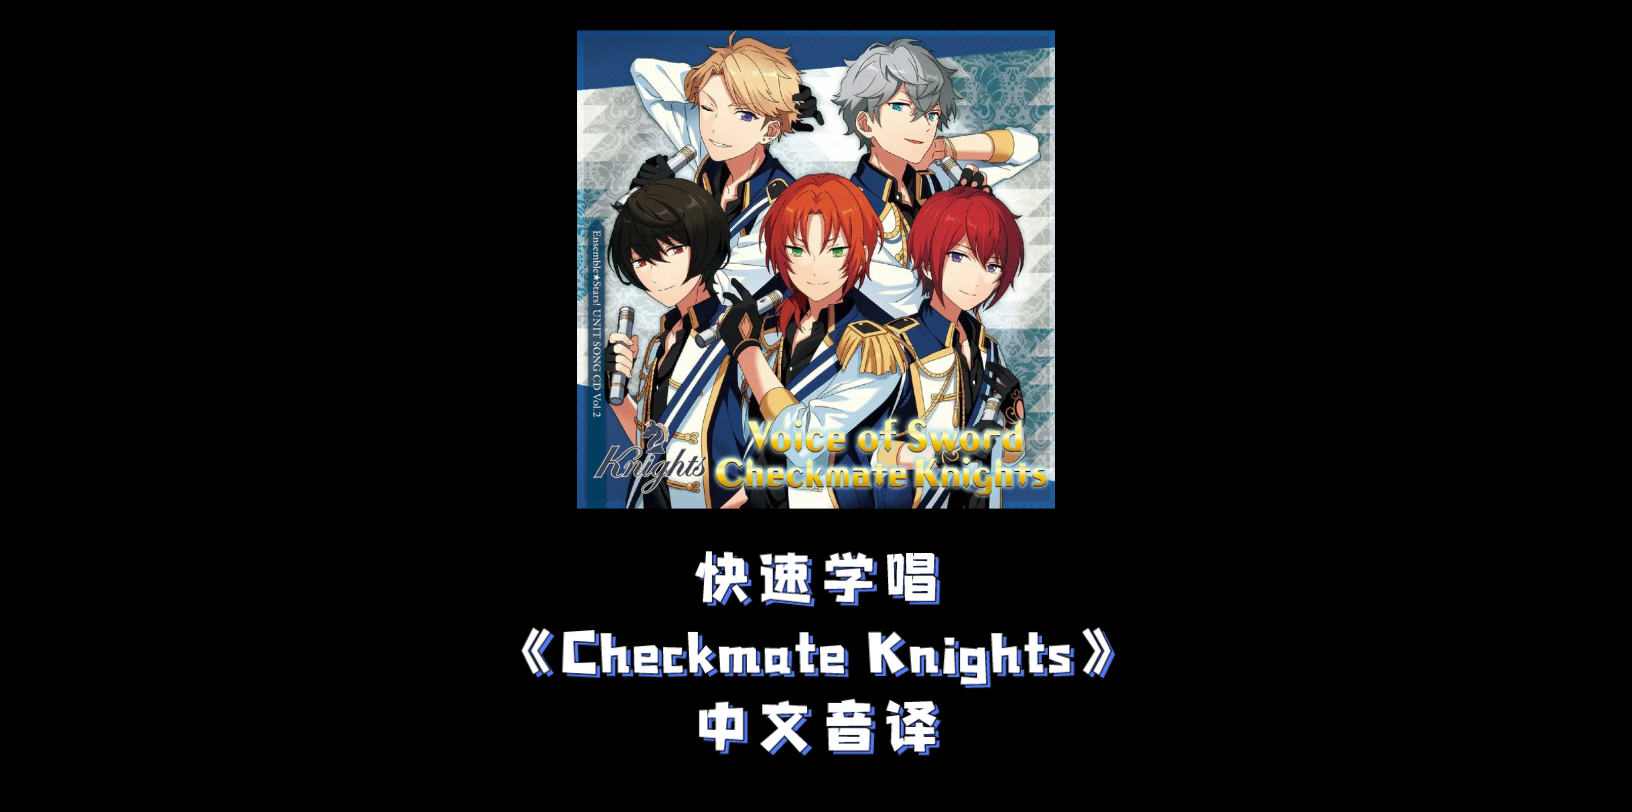 【ES2-快速学唱】 Knights 《Checkmate Knights》 空耳